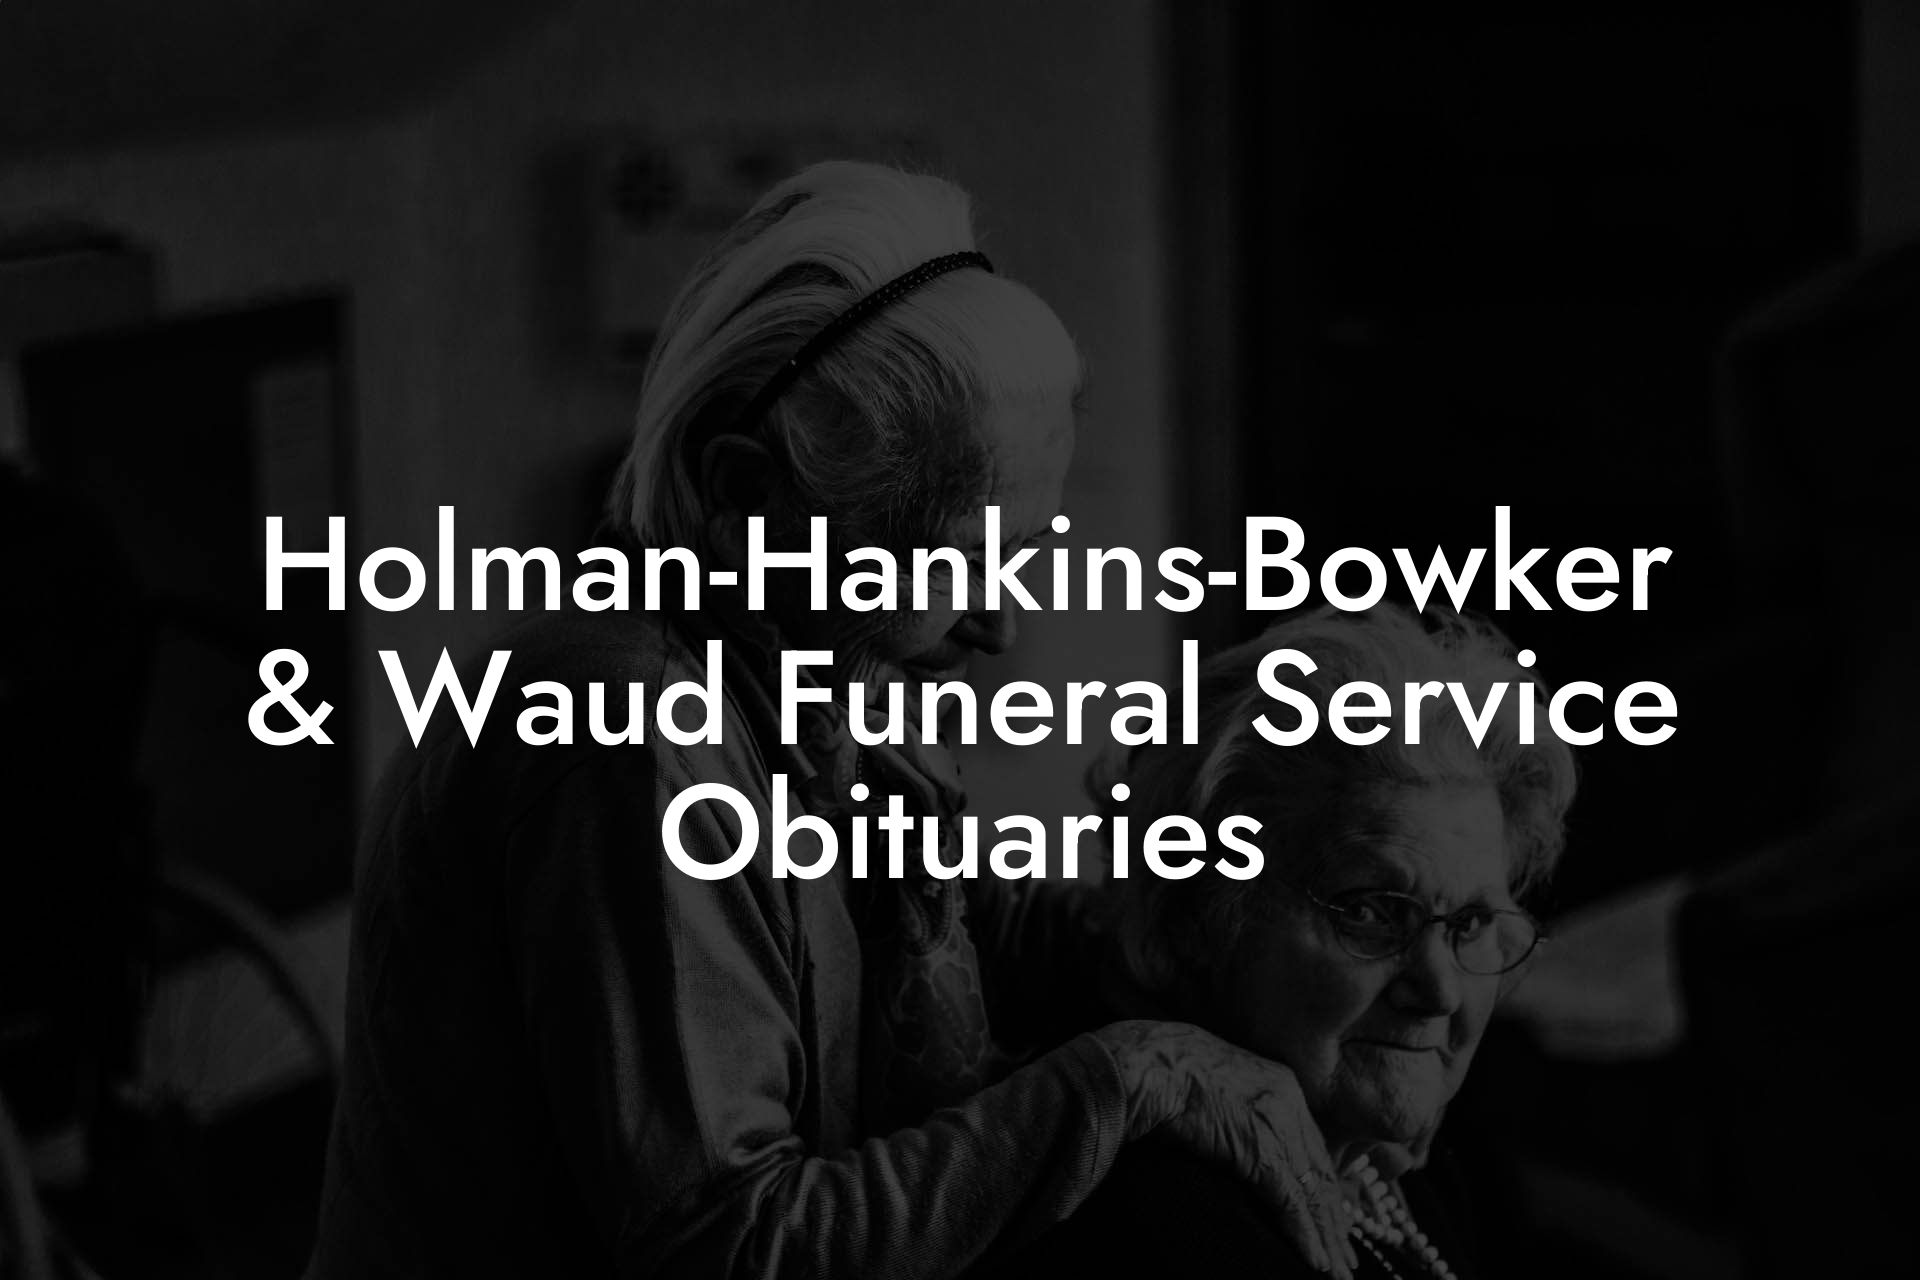 Holman-Hankins-Bowker & Waud Funeral Service Obituaries